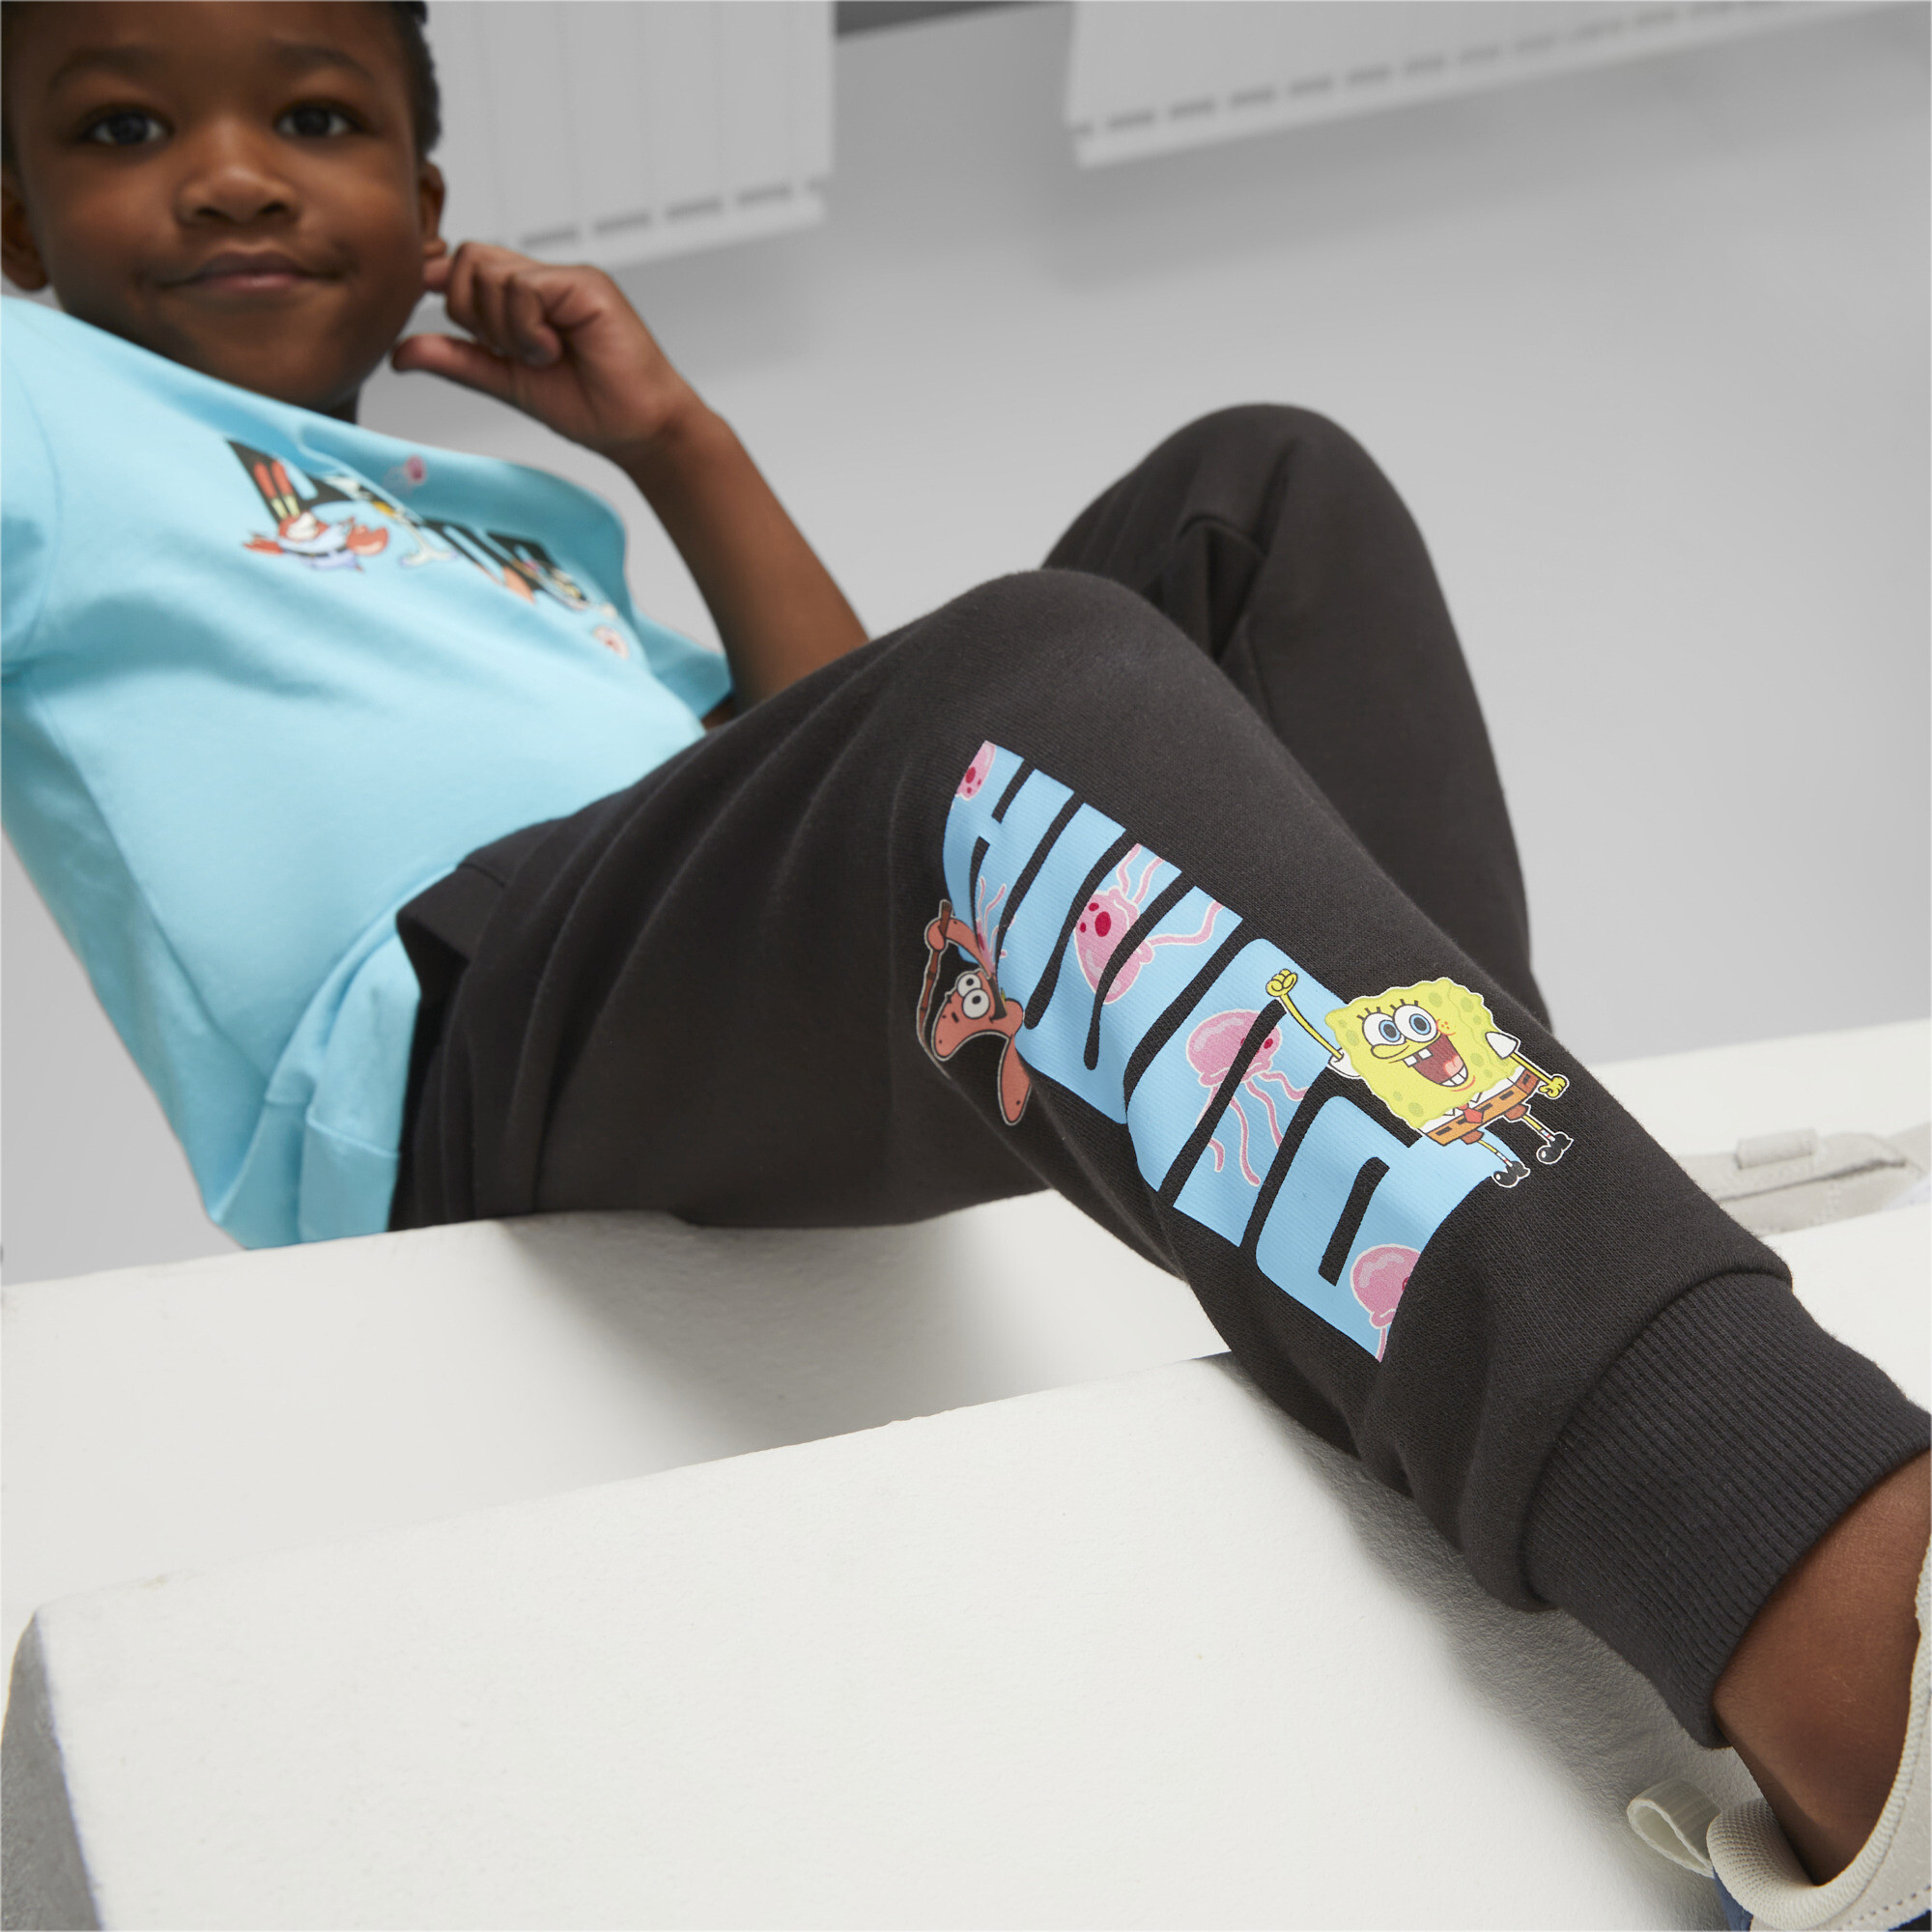 Puma X SPONGEBOB Sweatpants Kids, Black, Size 7-8Y, Clothing